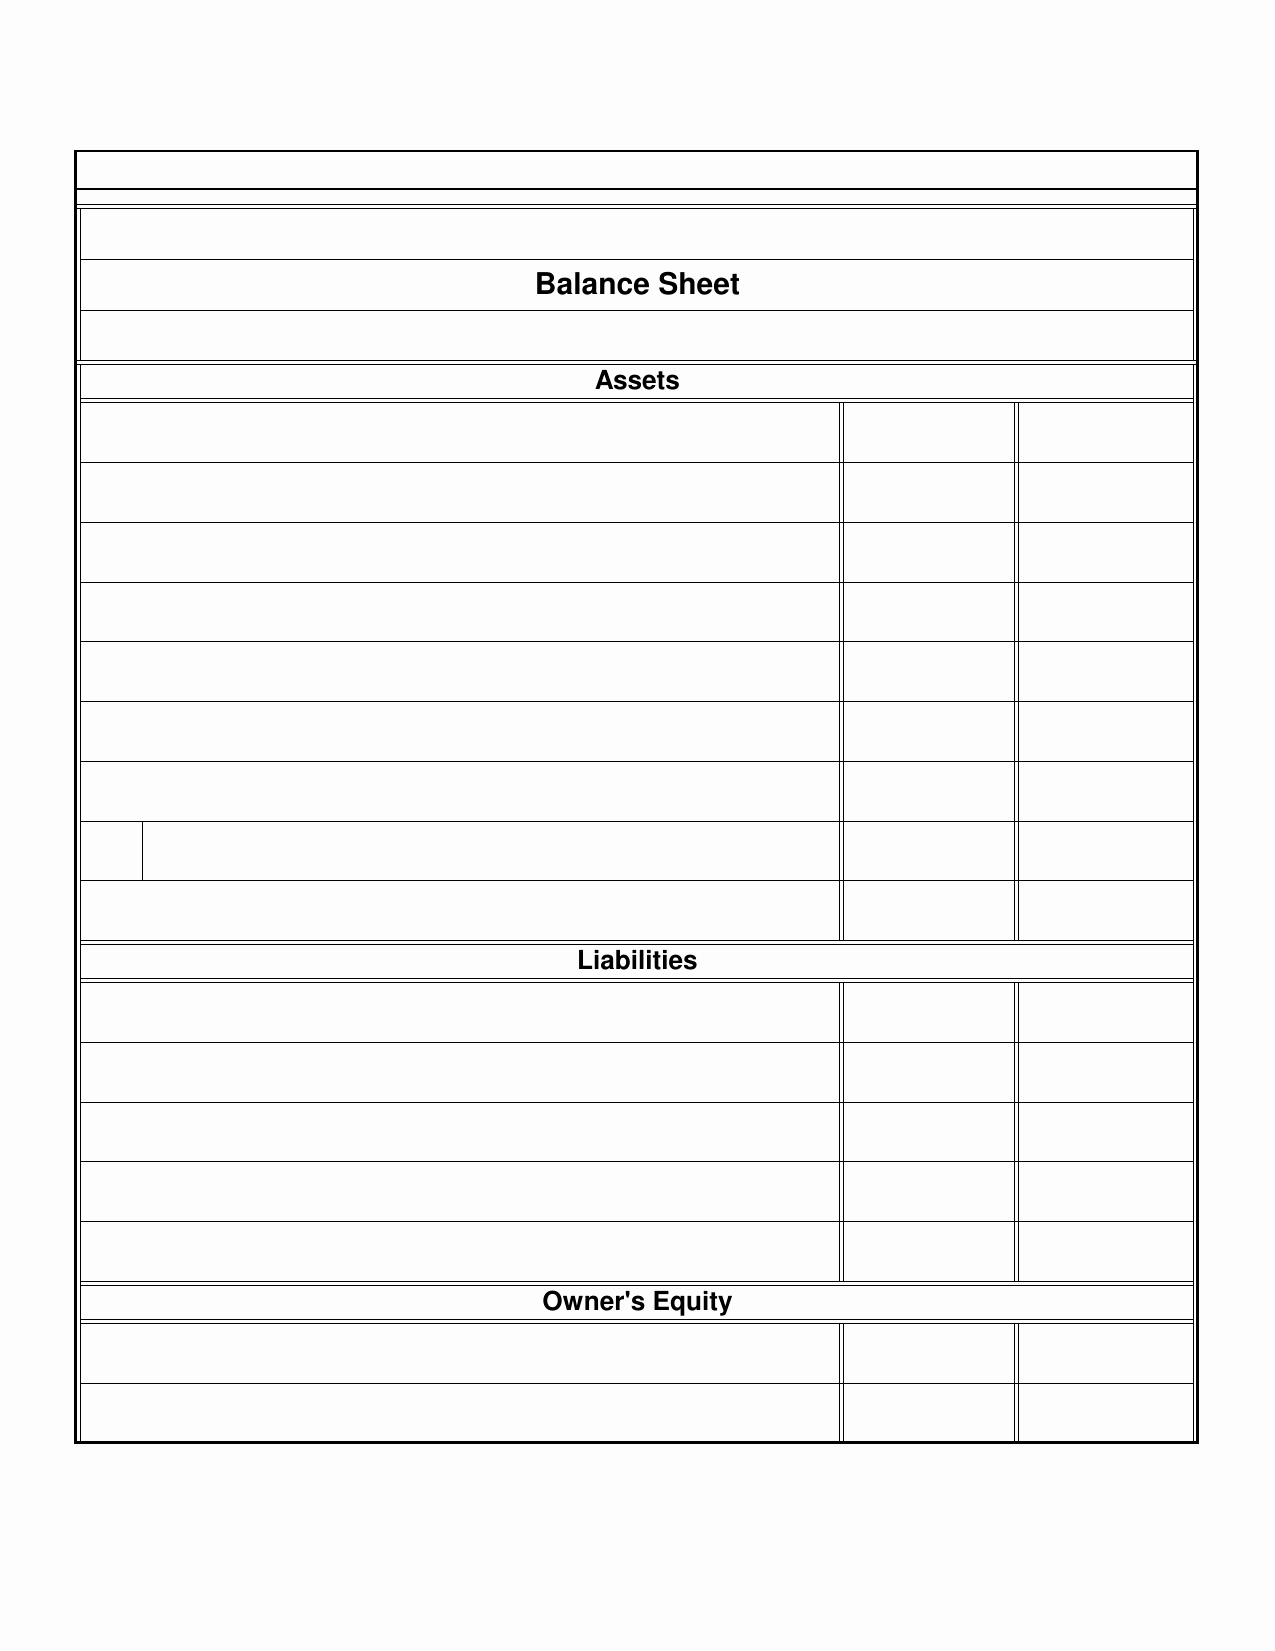 Download Restaurant Balance Sheet Template Excel